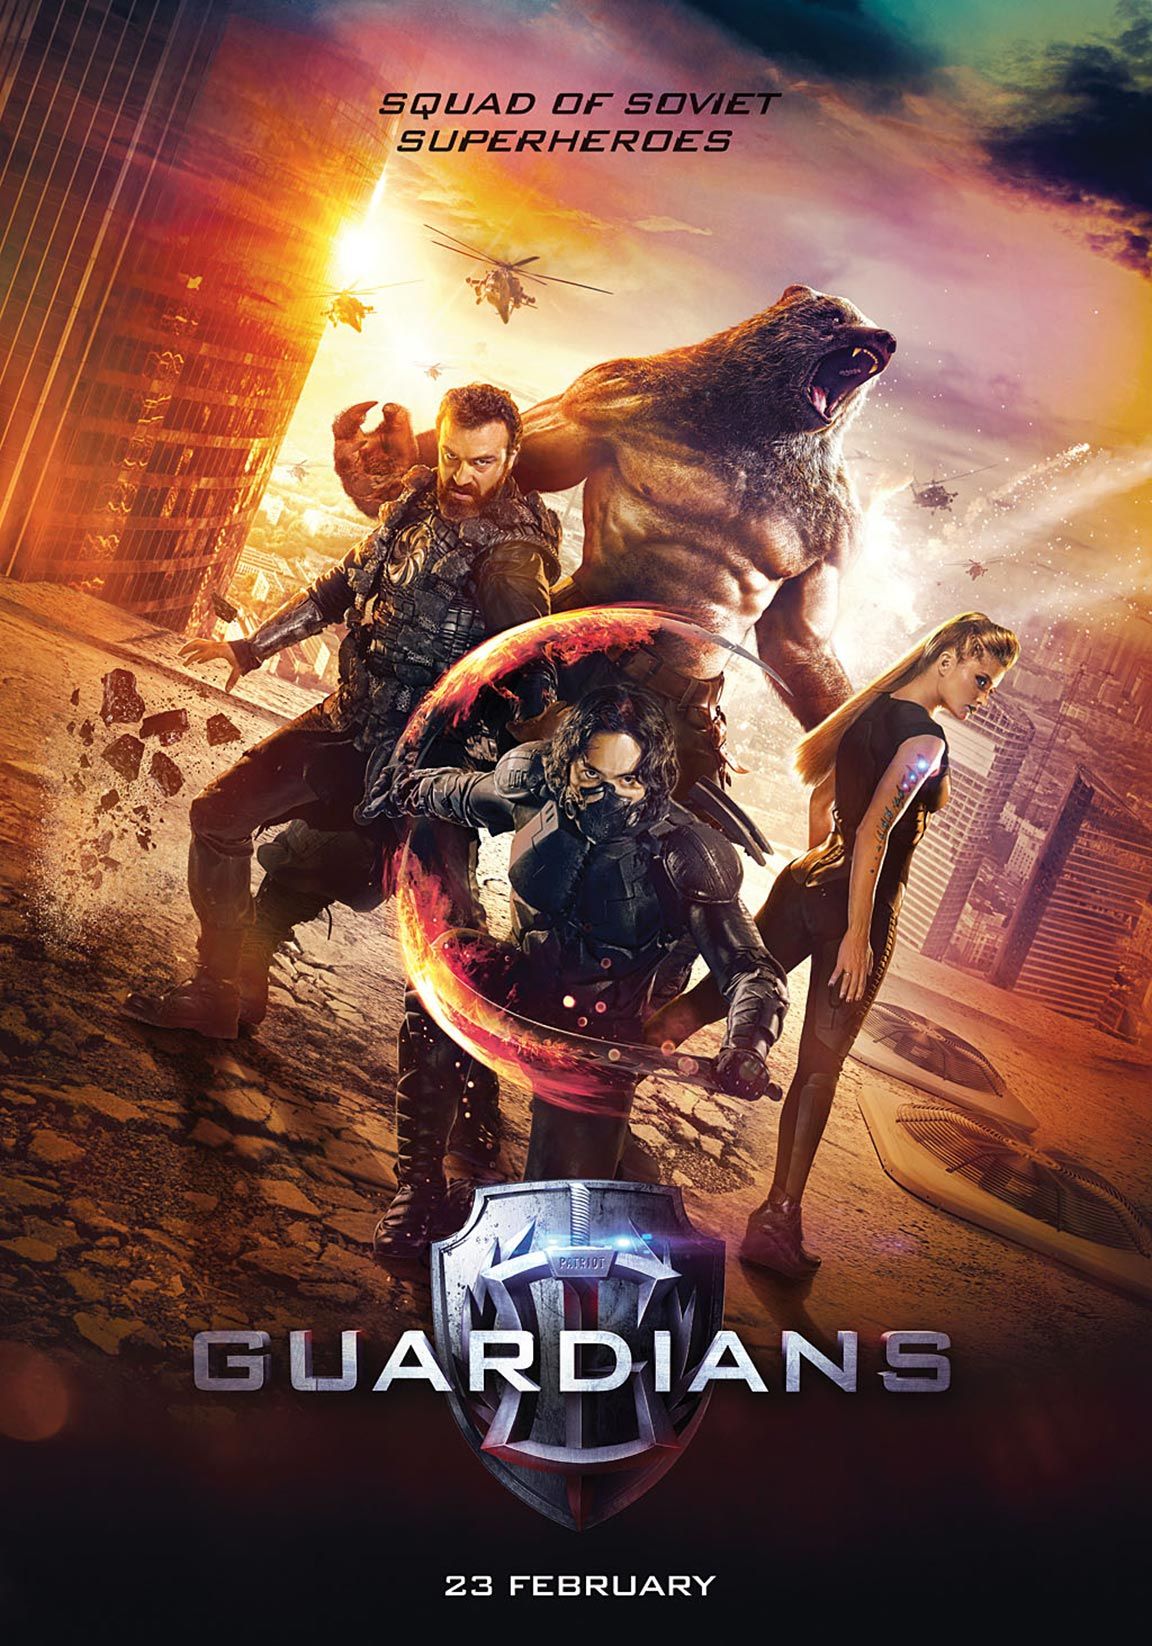 Guardians (2017) poster